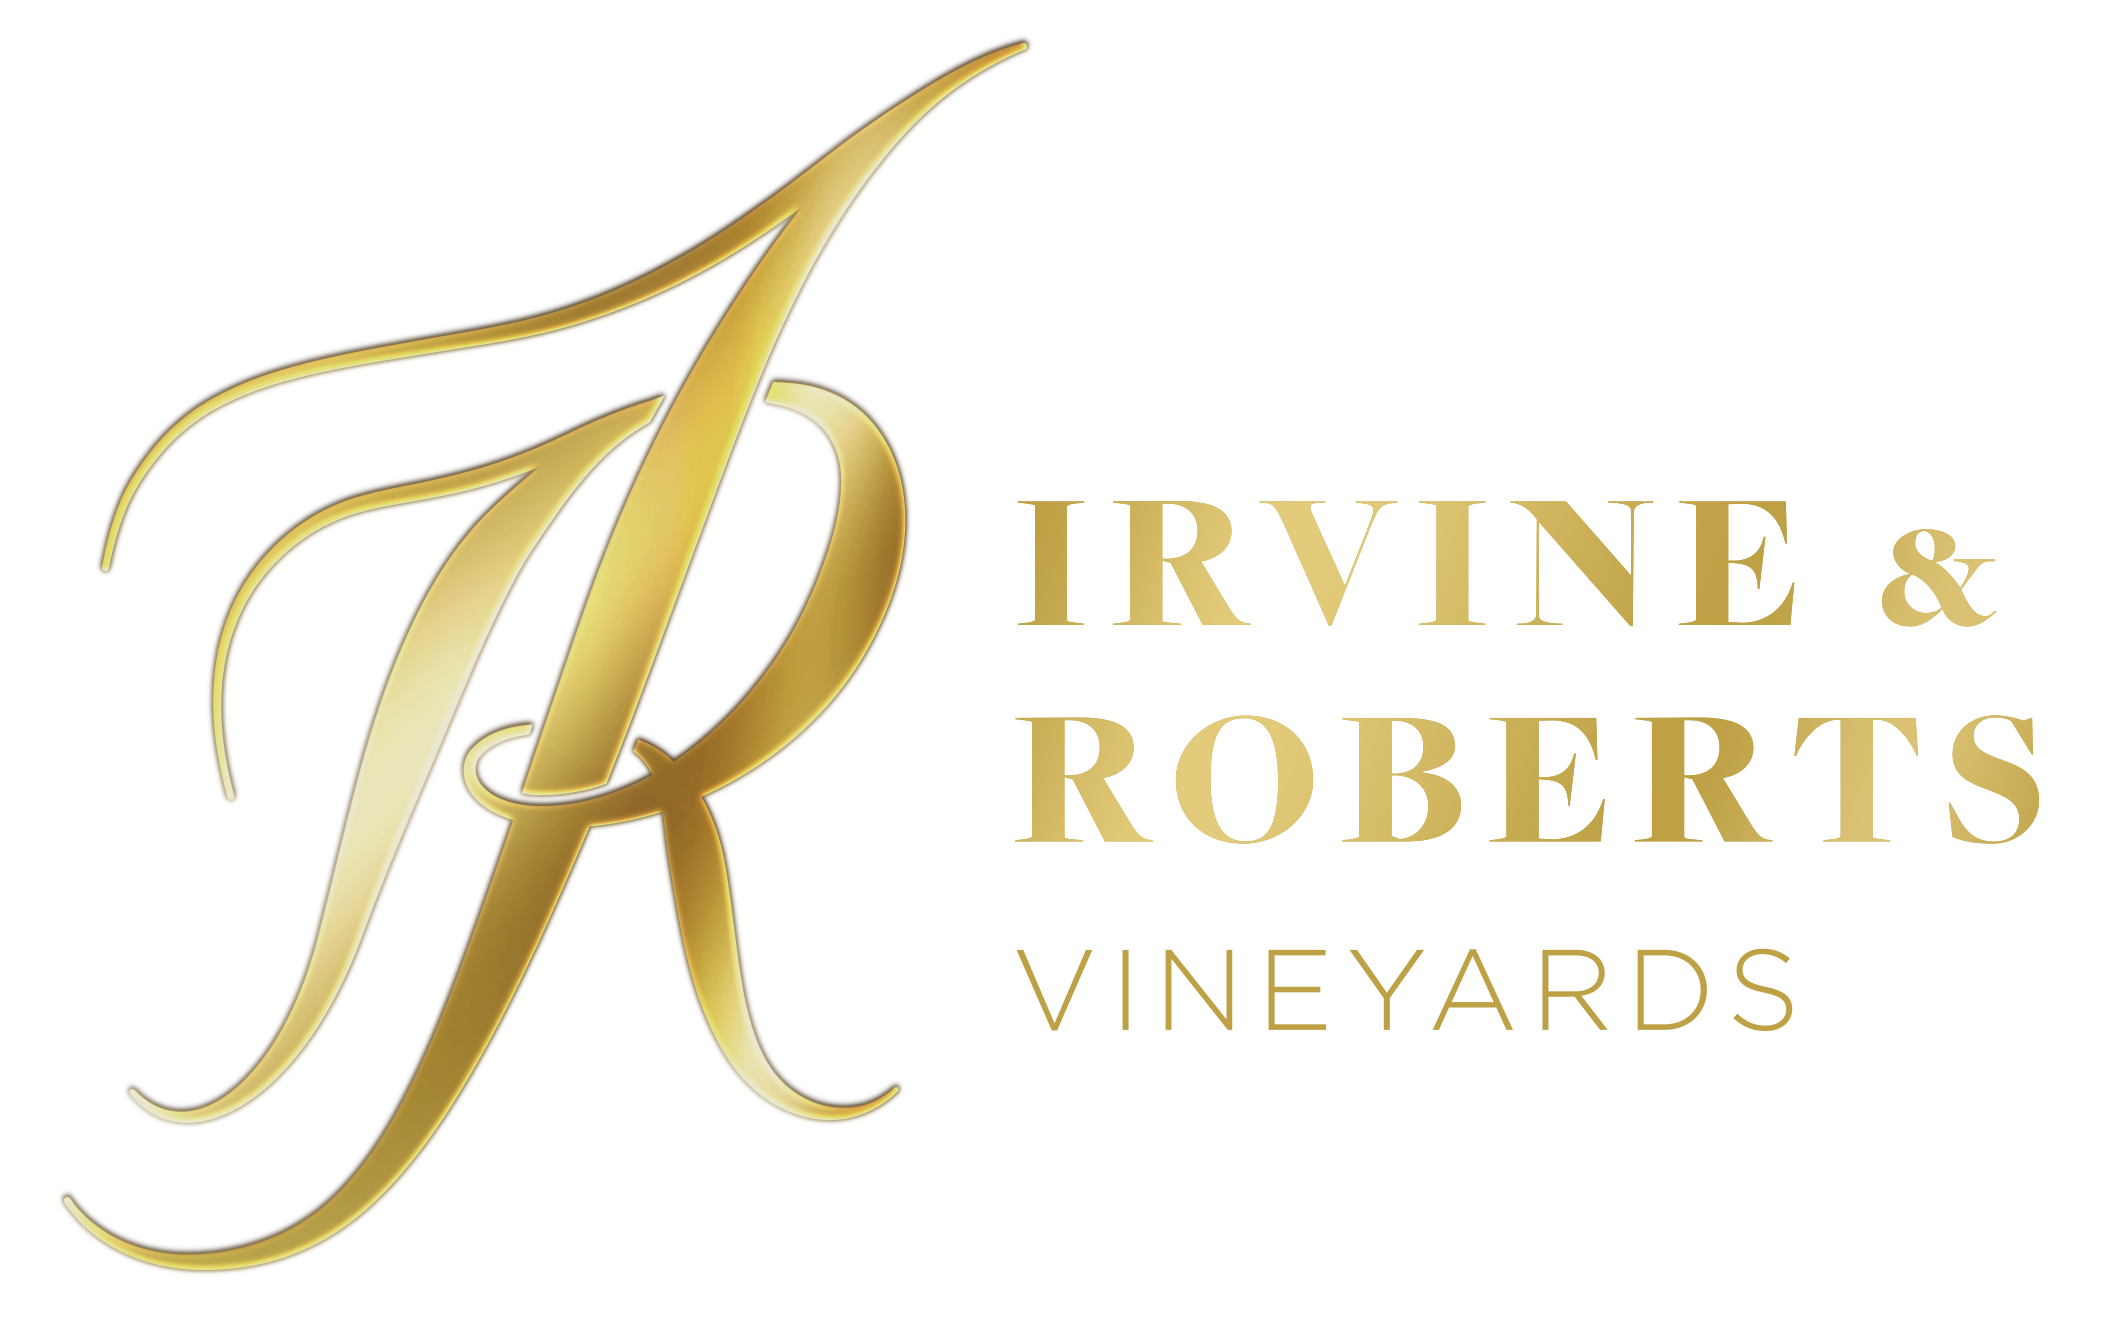 Irvine & Roberts Vineyards logo in gold